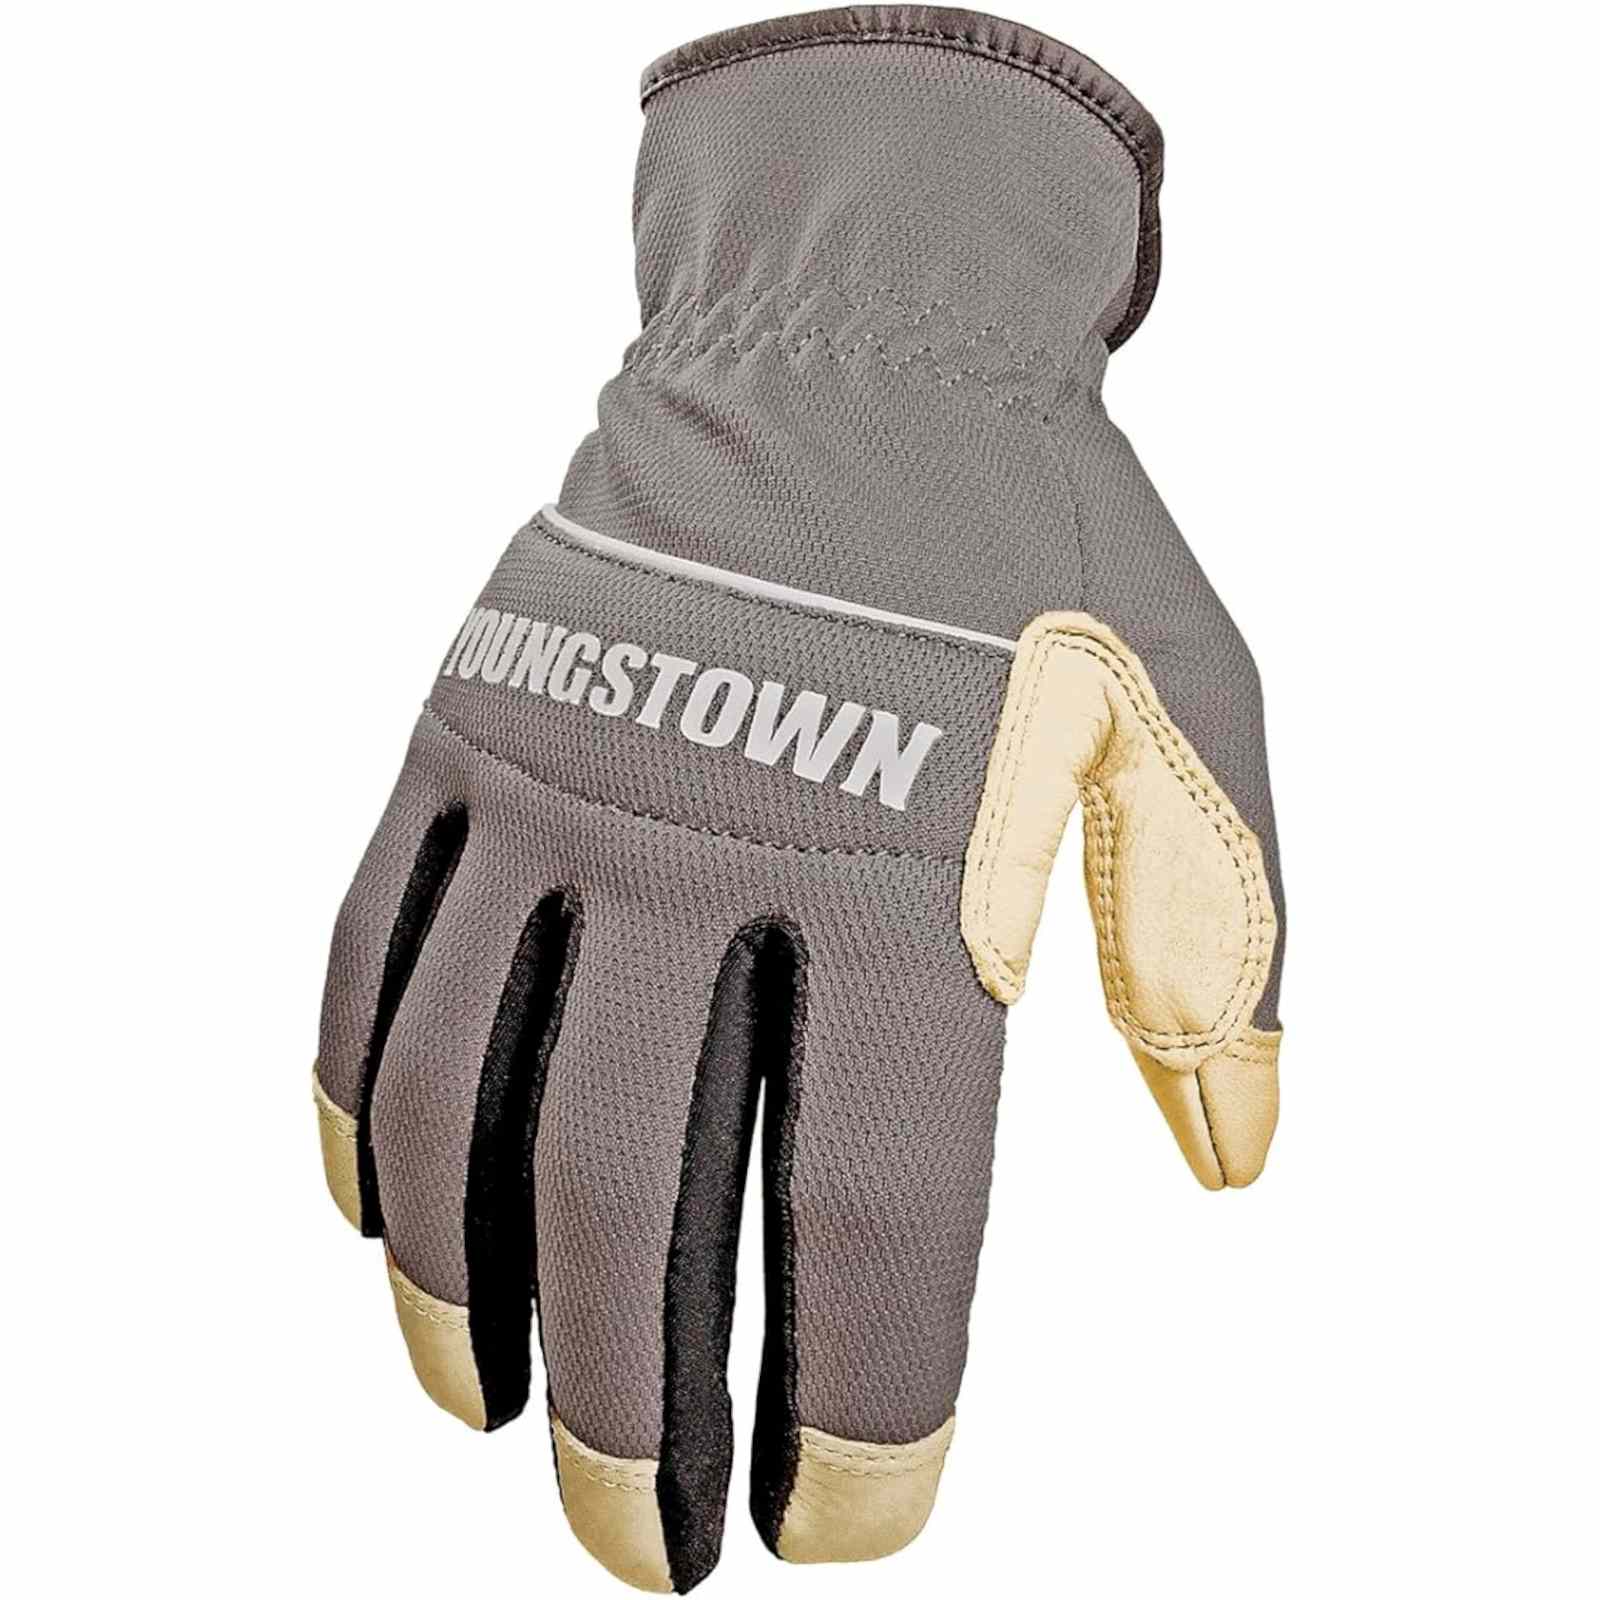 Youngstown Glove Hybrid Plus Glove